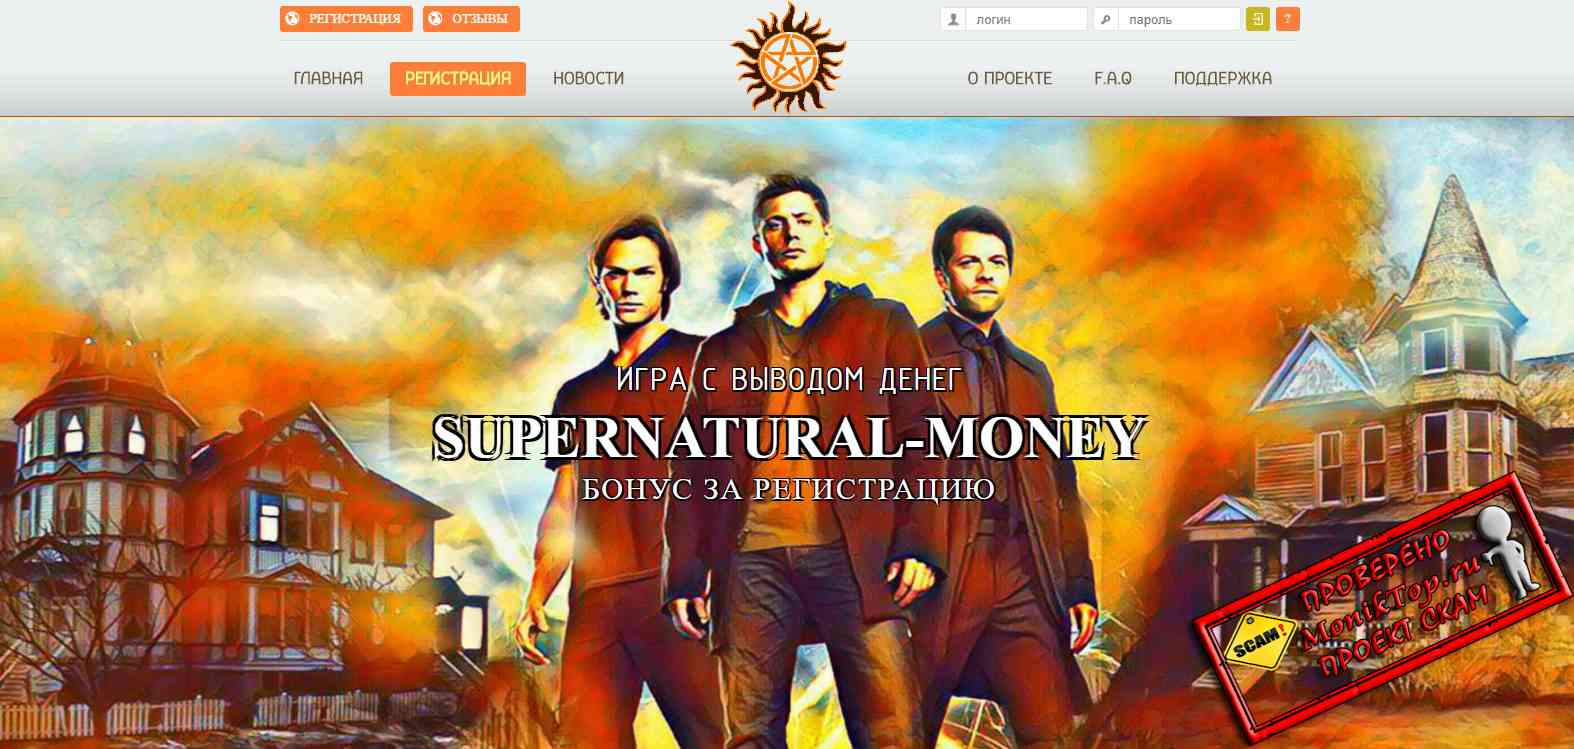 Supernatural-money